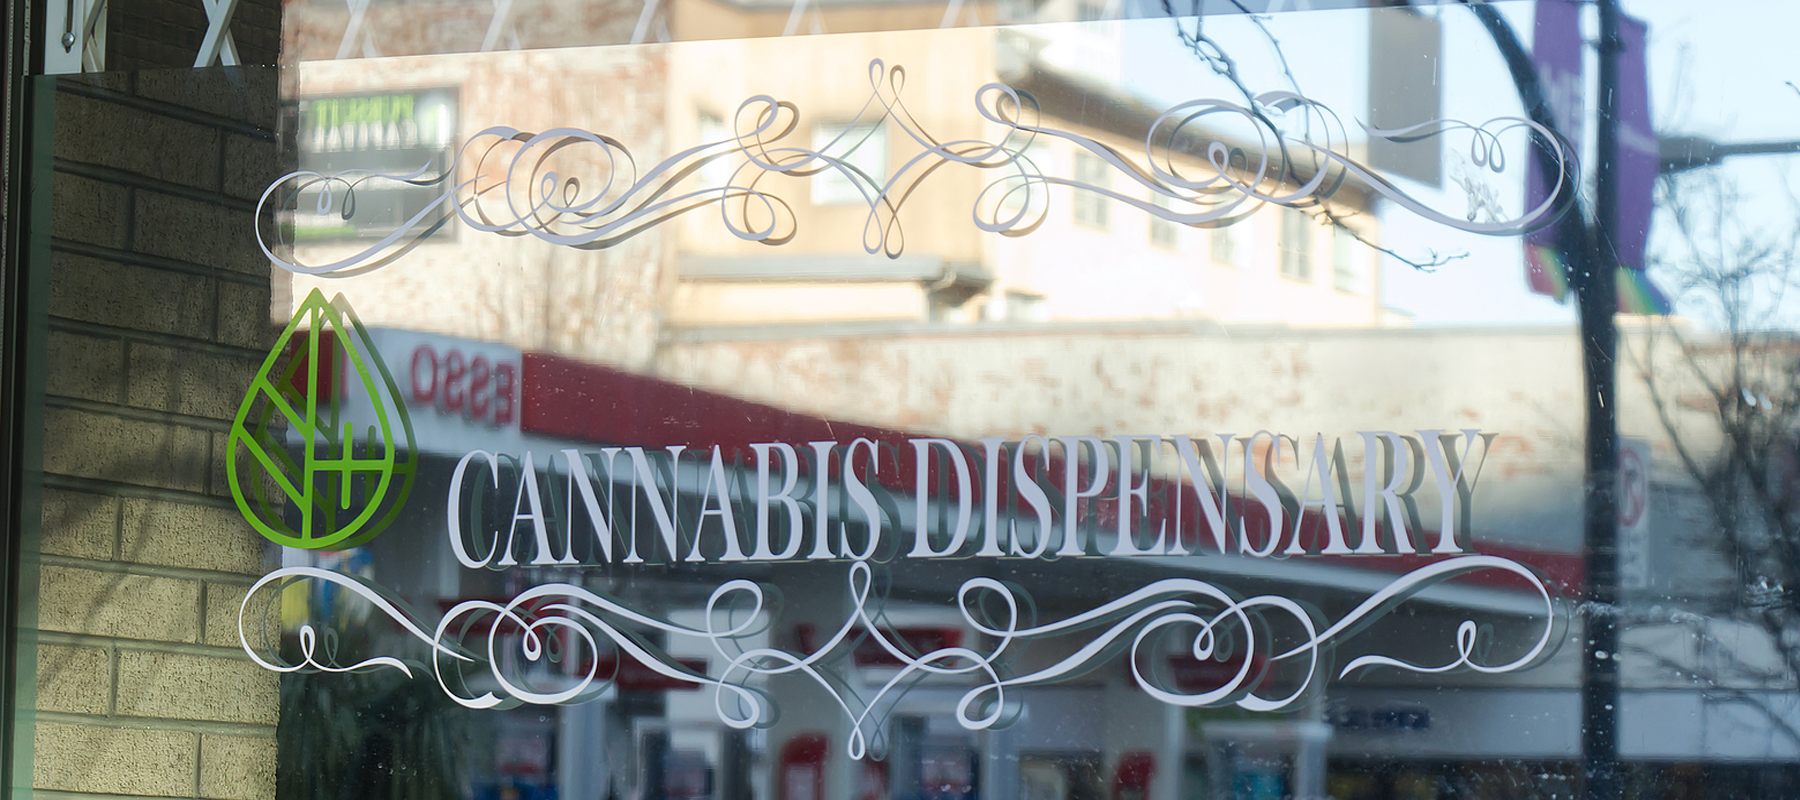 Cannabis dispensary sign on retail window